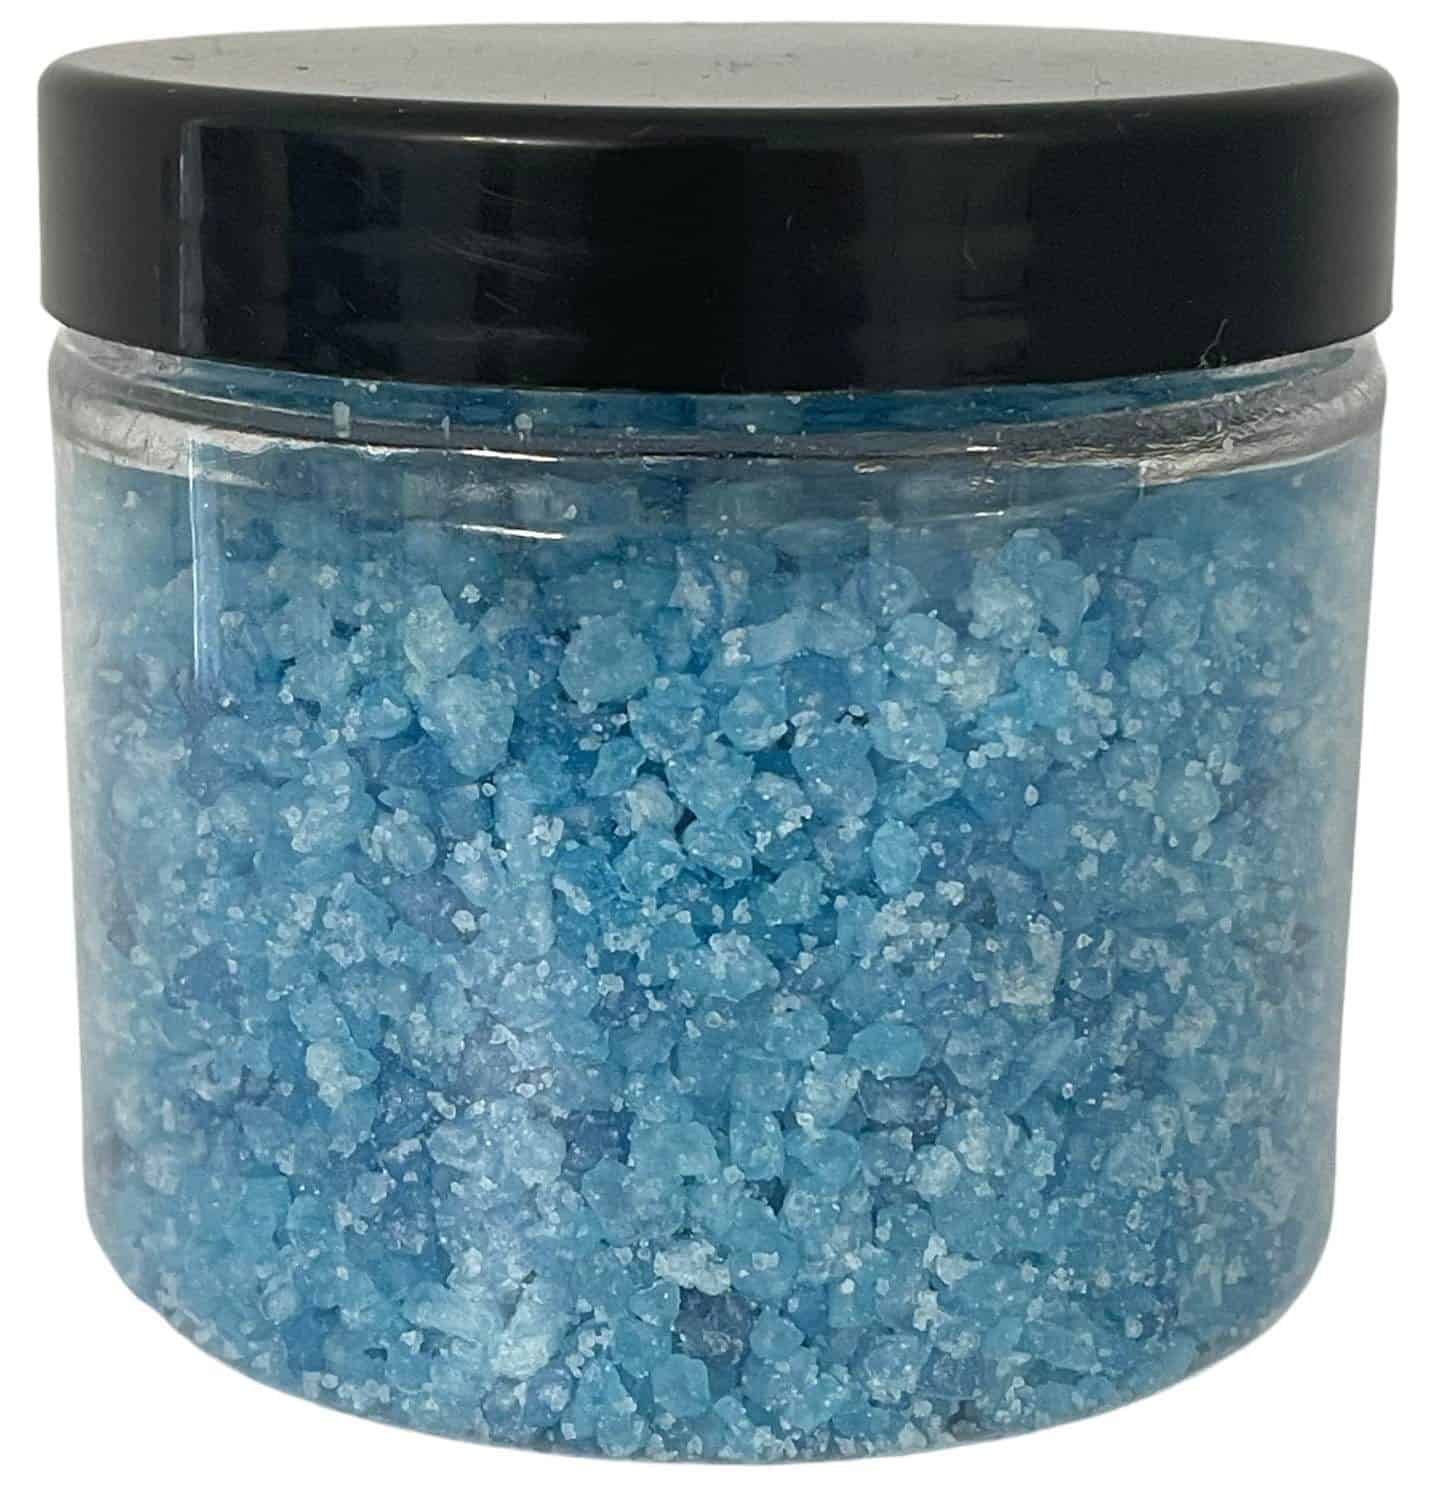 Foaming Bath Salts Making Assessment - Aftershave Scents